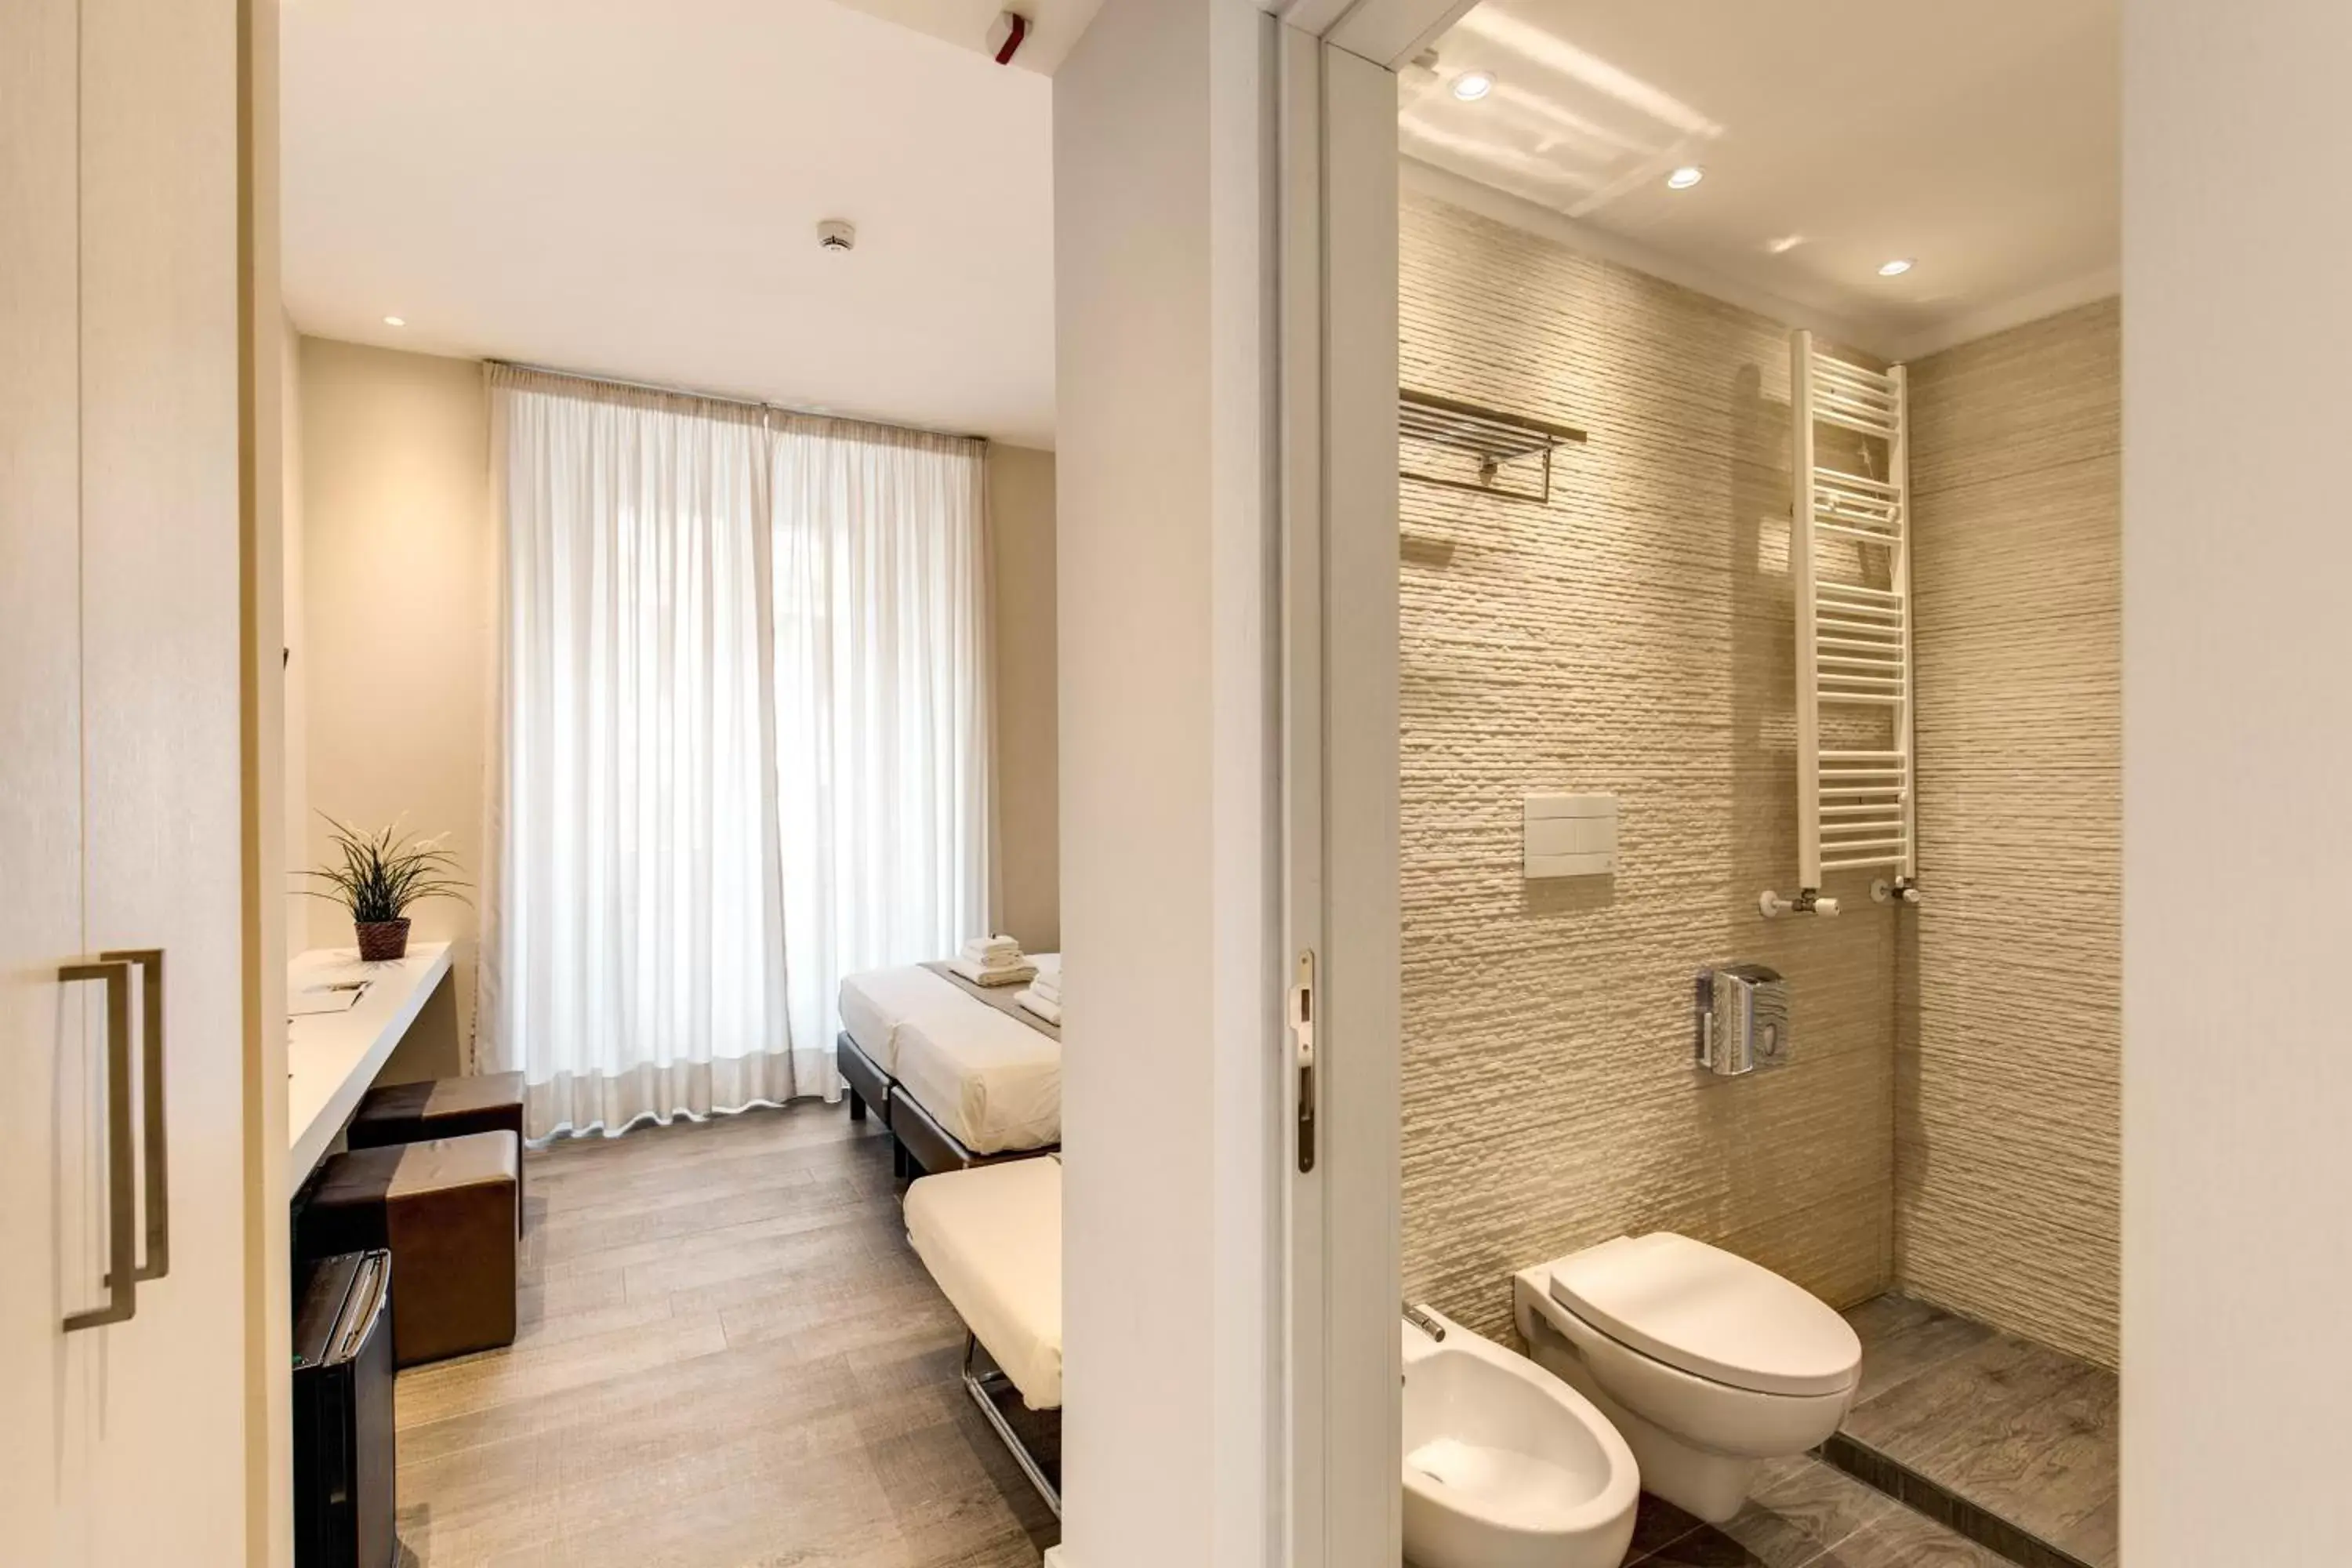 Photo of the whole room, Bathroom in ECCE ROMA